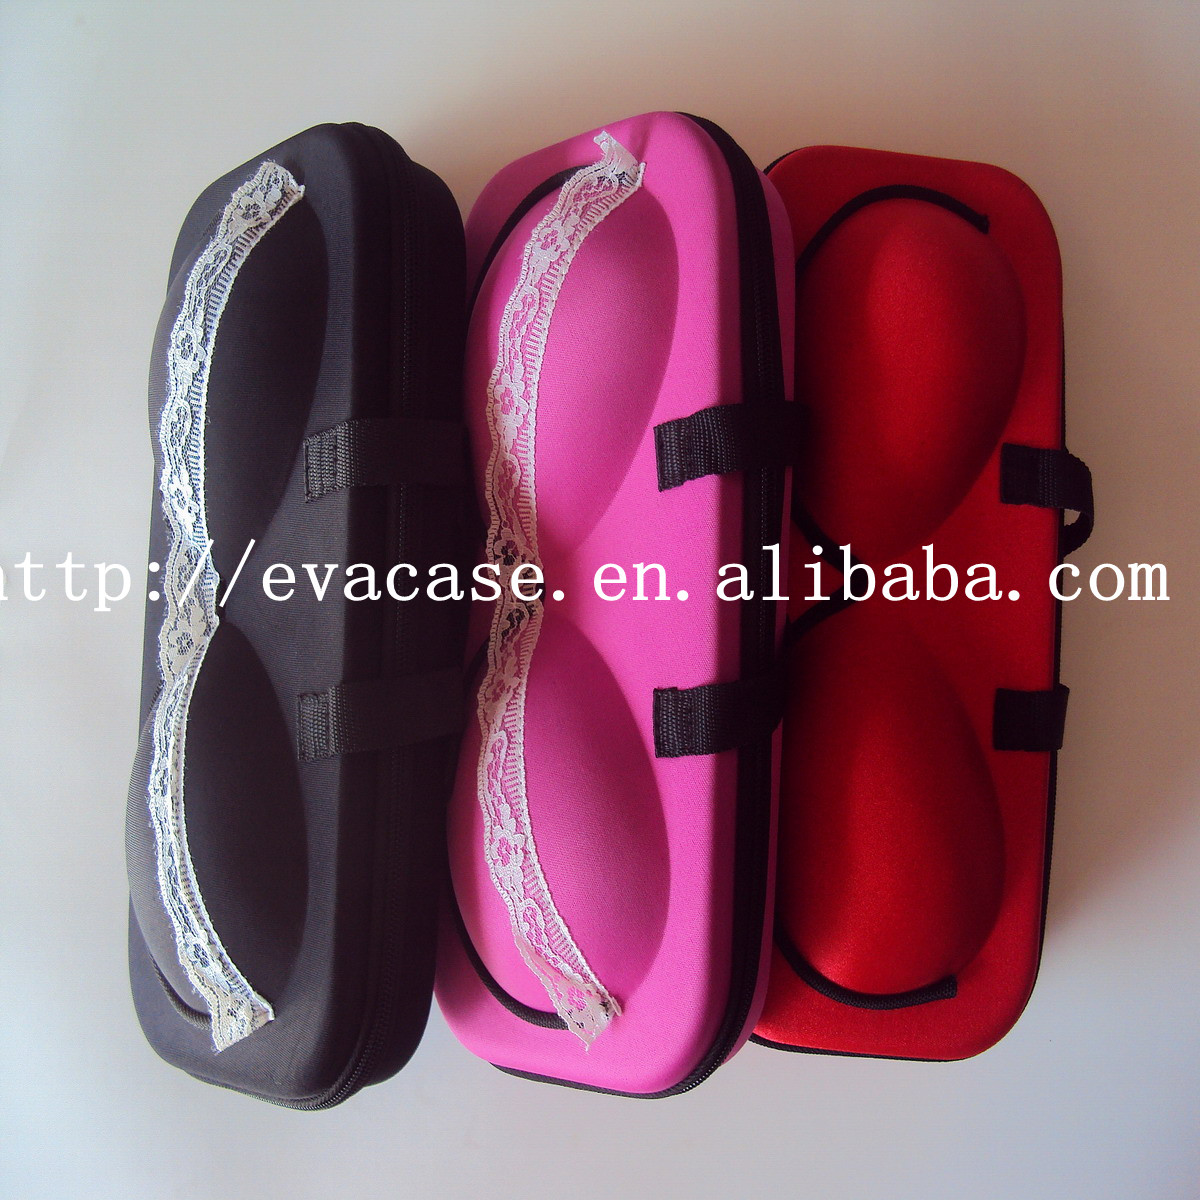 2013 Hot-sale EVA Travel Bra Case